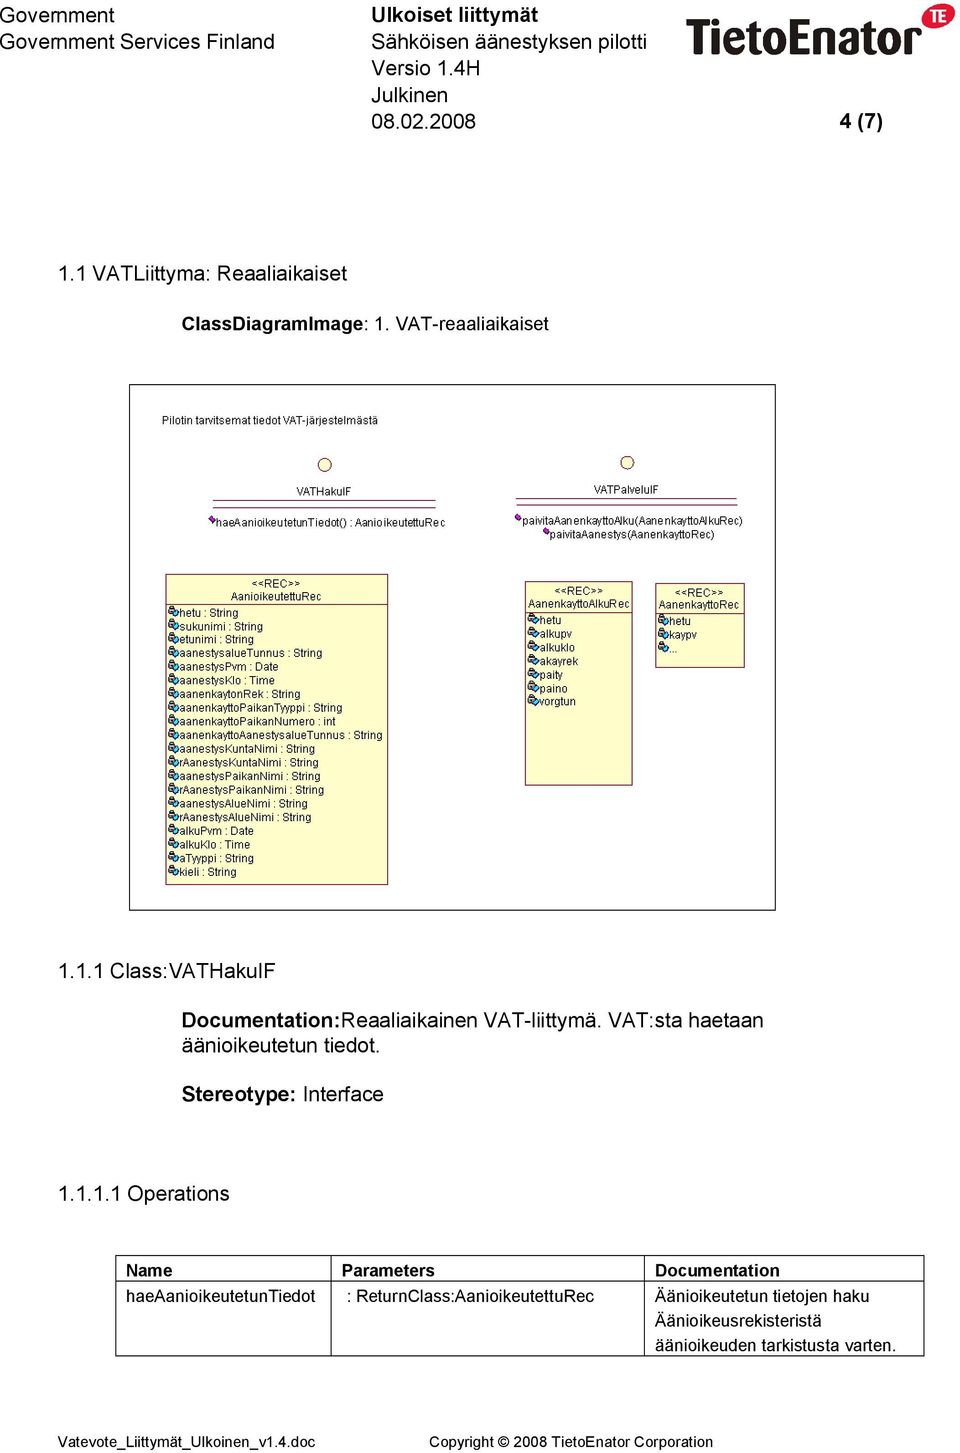 1.1.1 Operations Name Parameters Documentation haeaanioikeutetuntiedot :